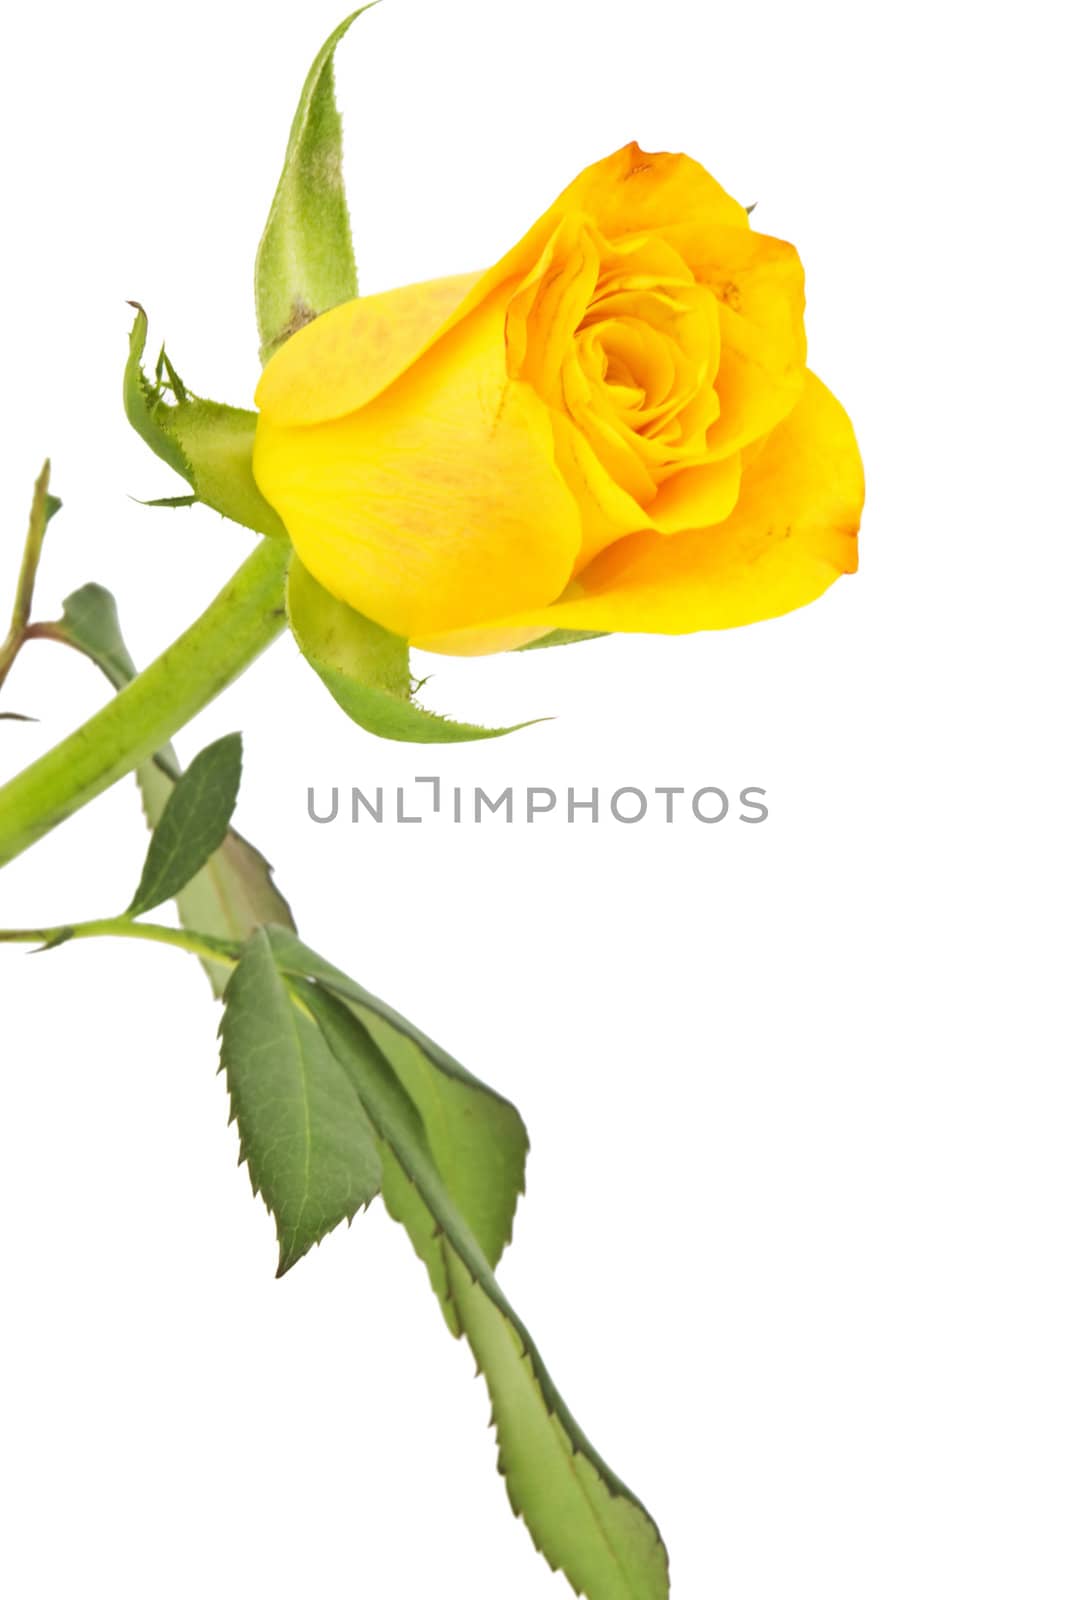 single yellow rose by miradrozdowski